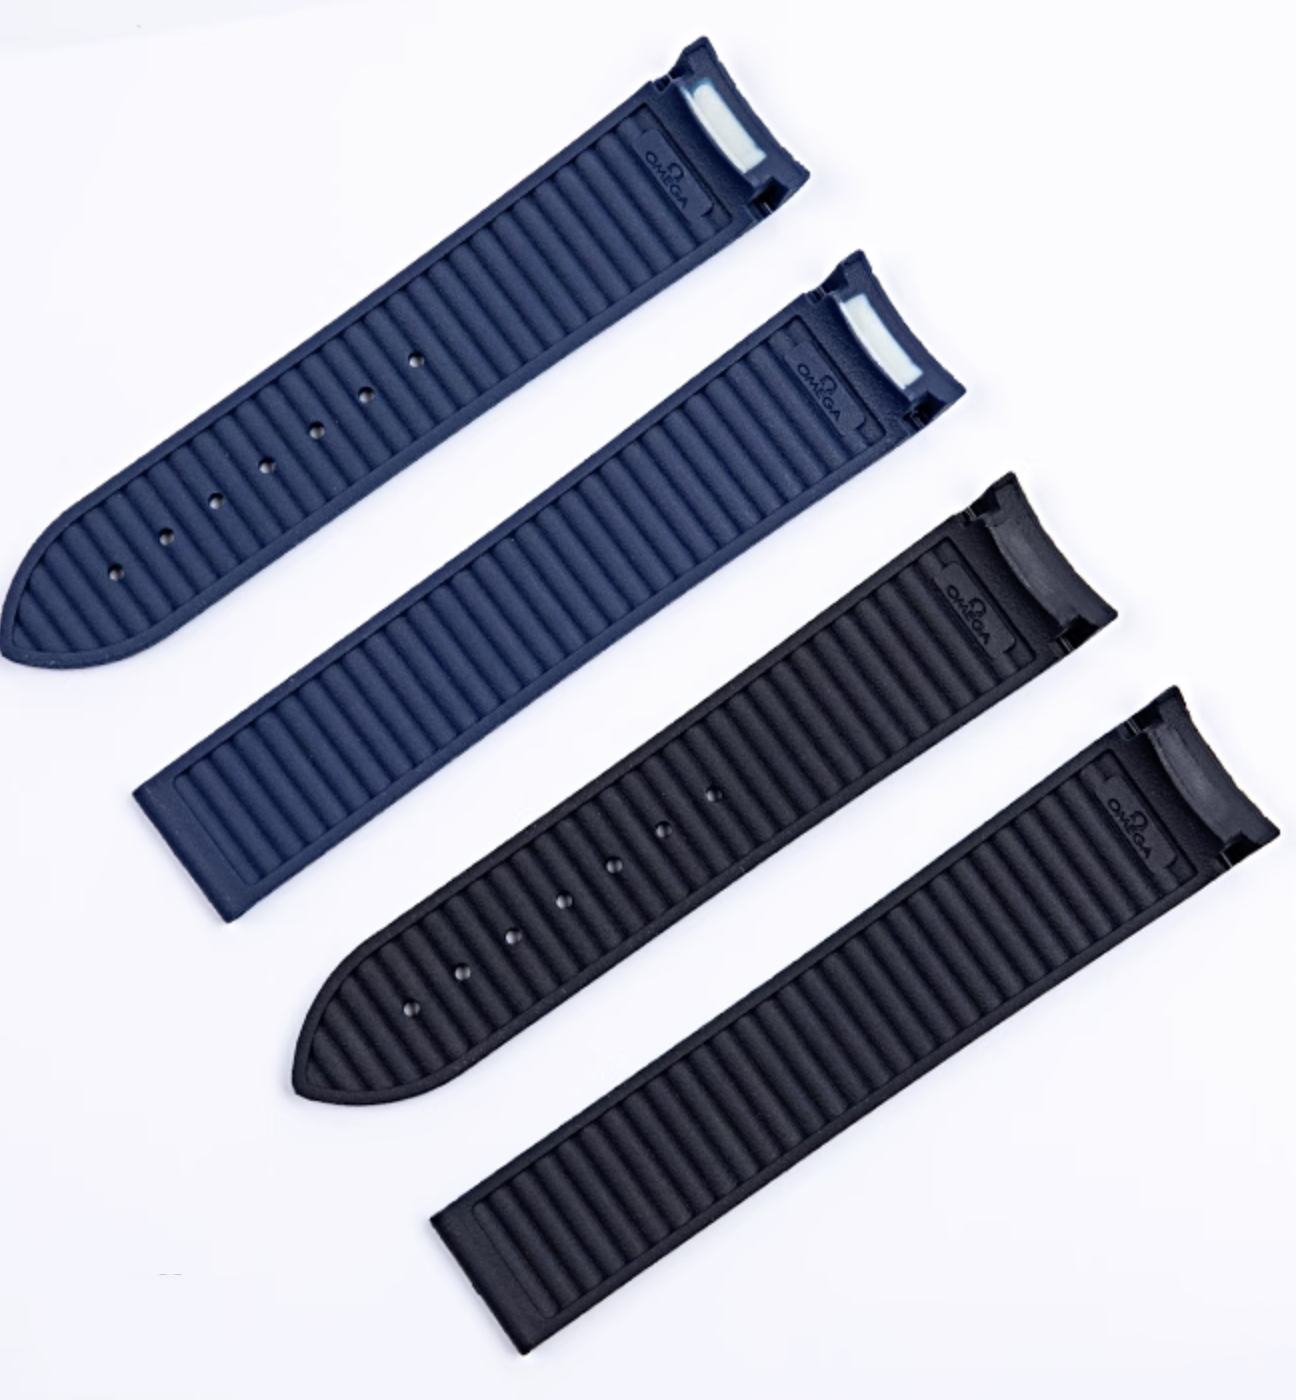 Omega Black and Blue Rubber strap